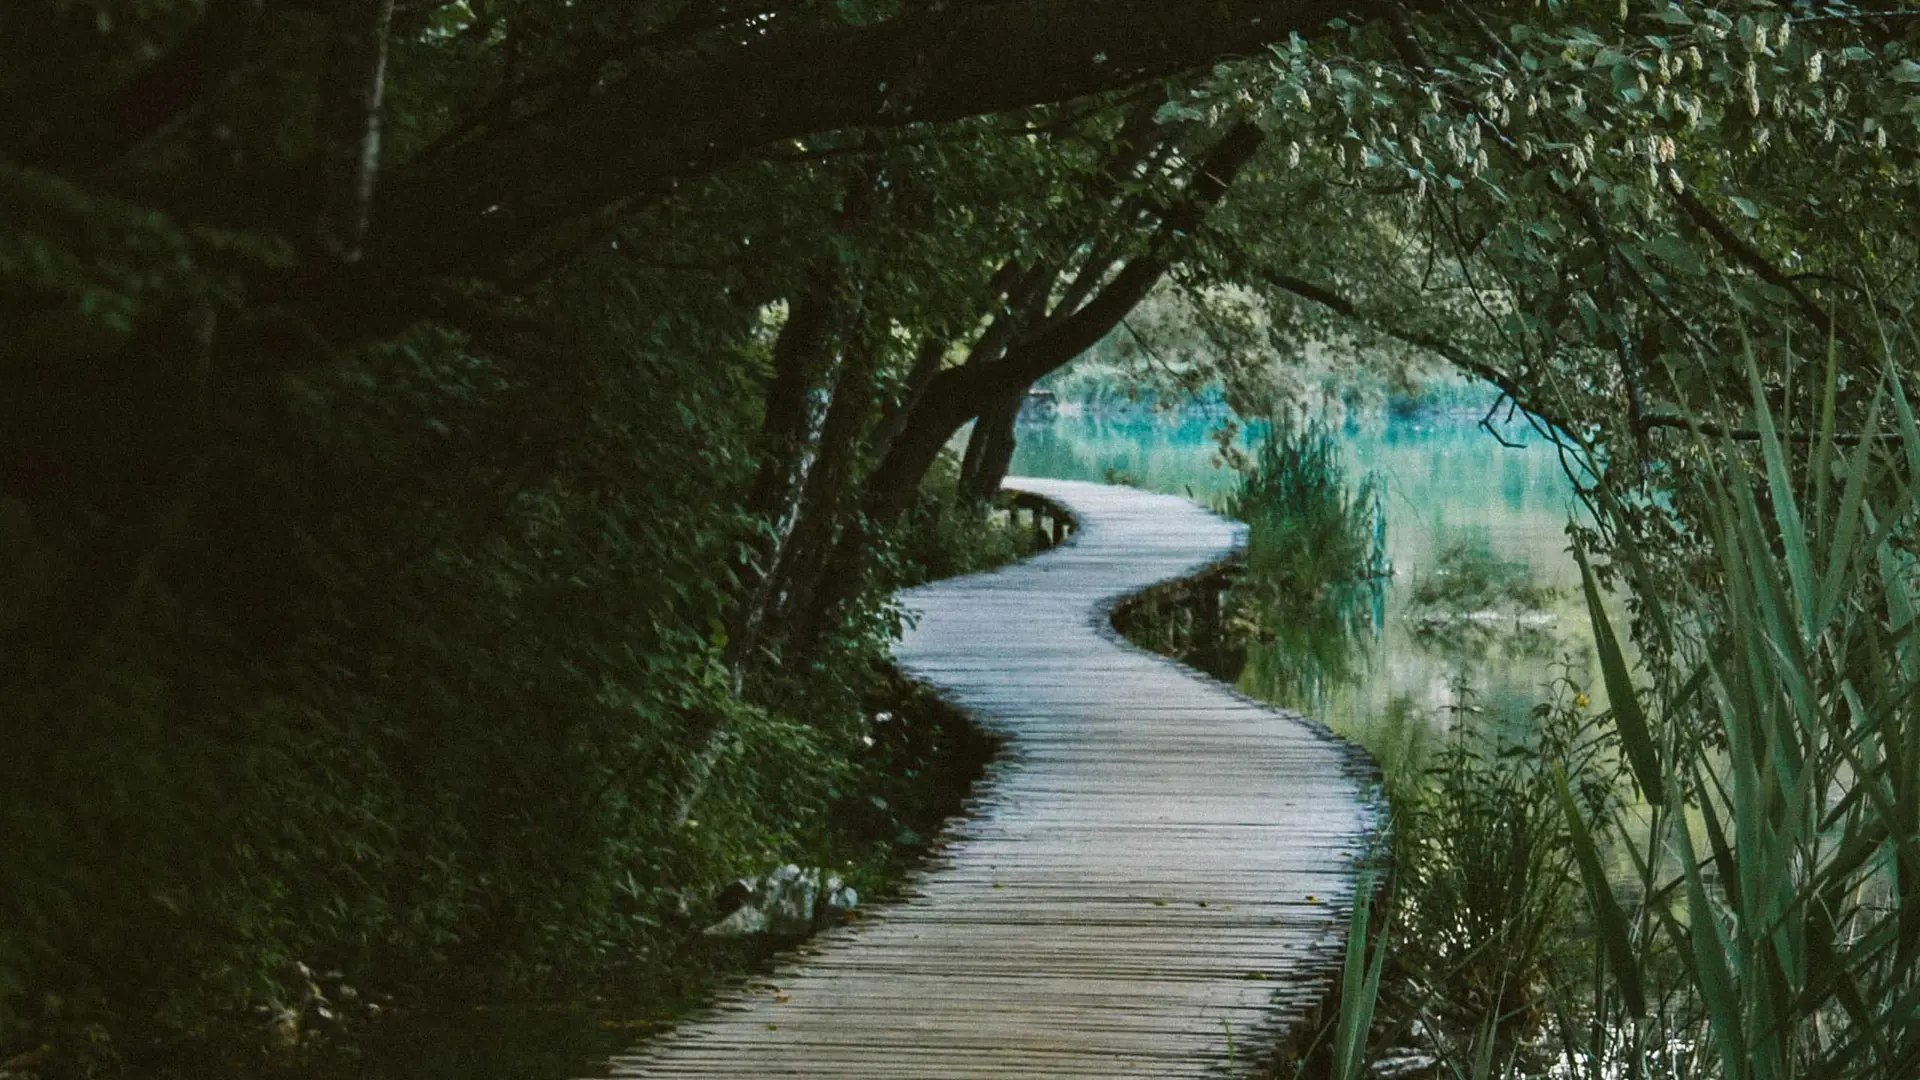 Winding wooden path in wetlands